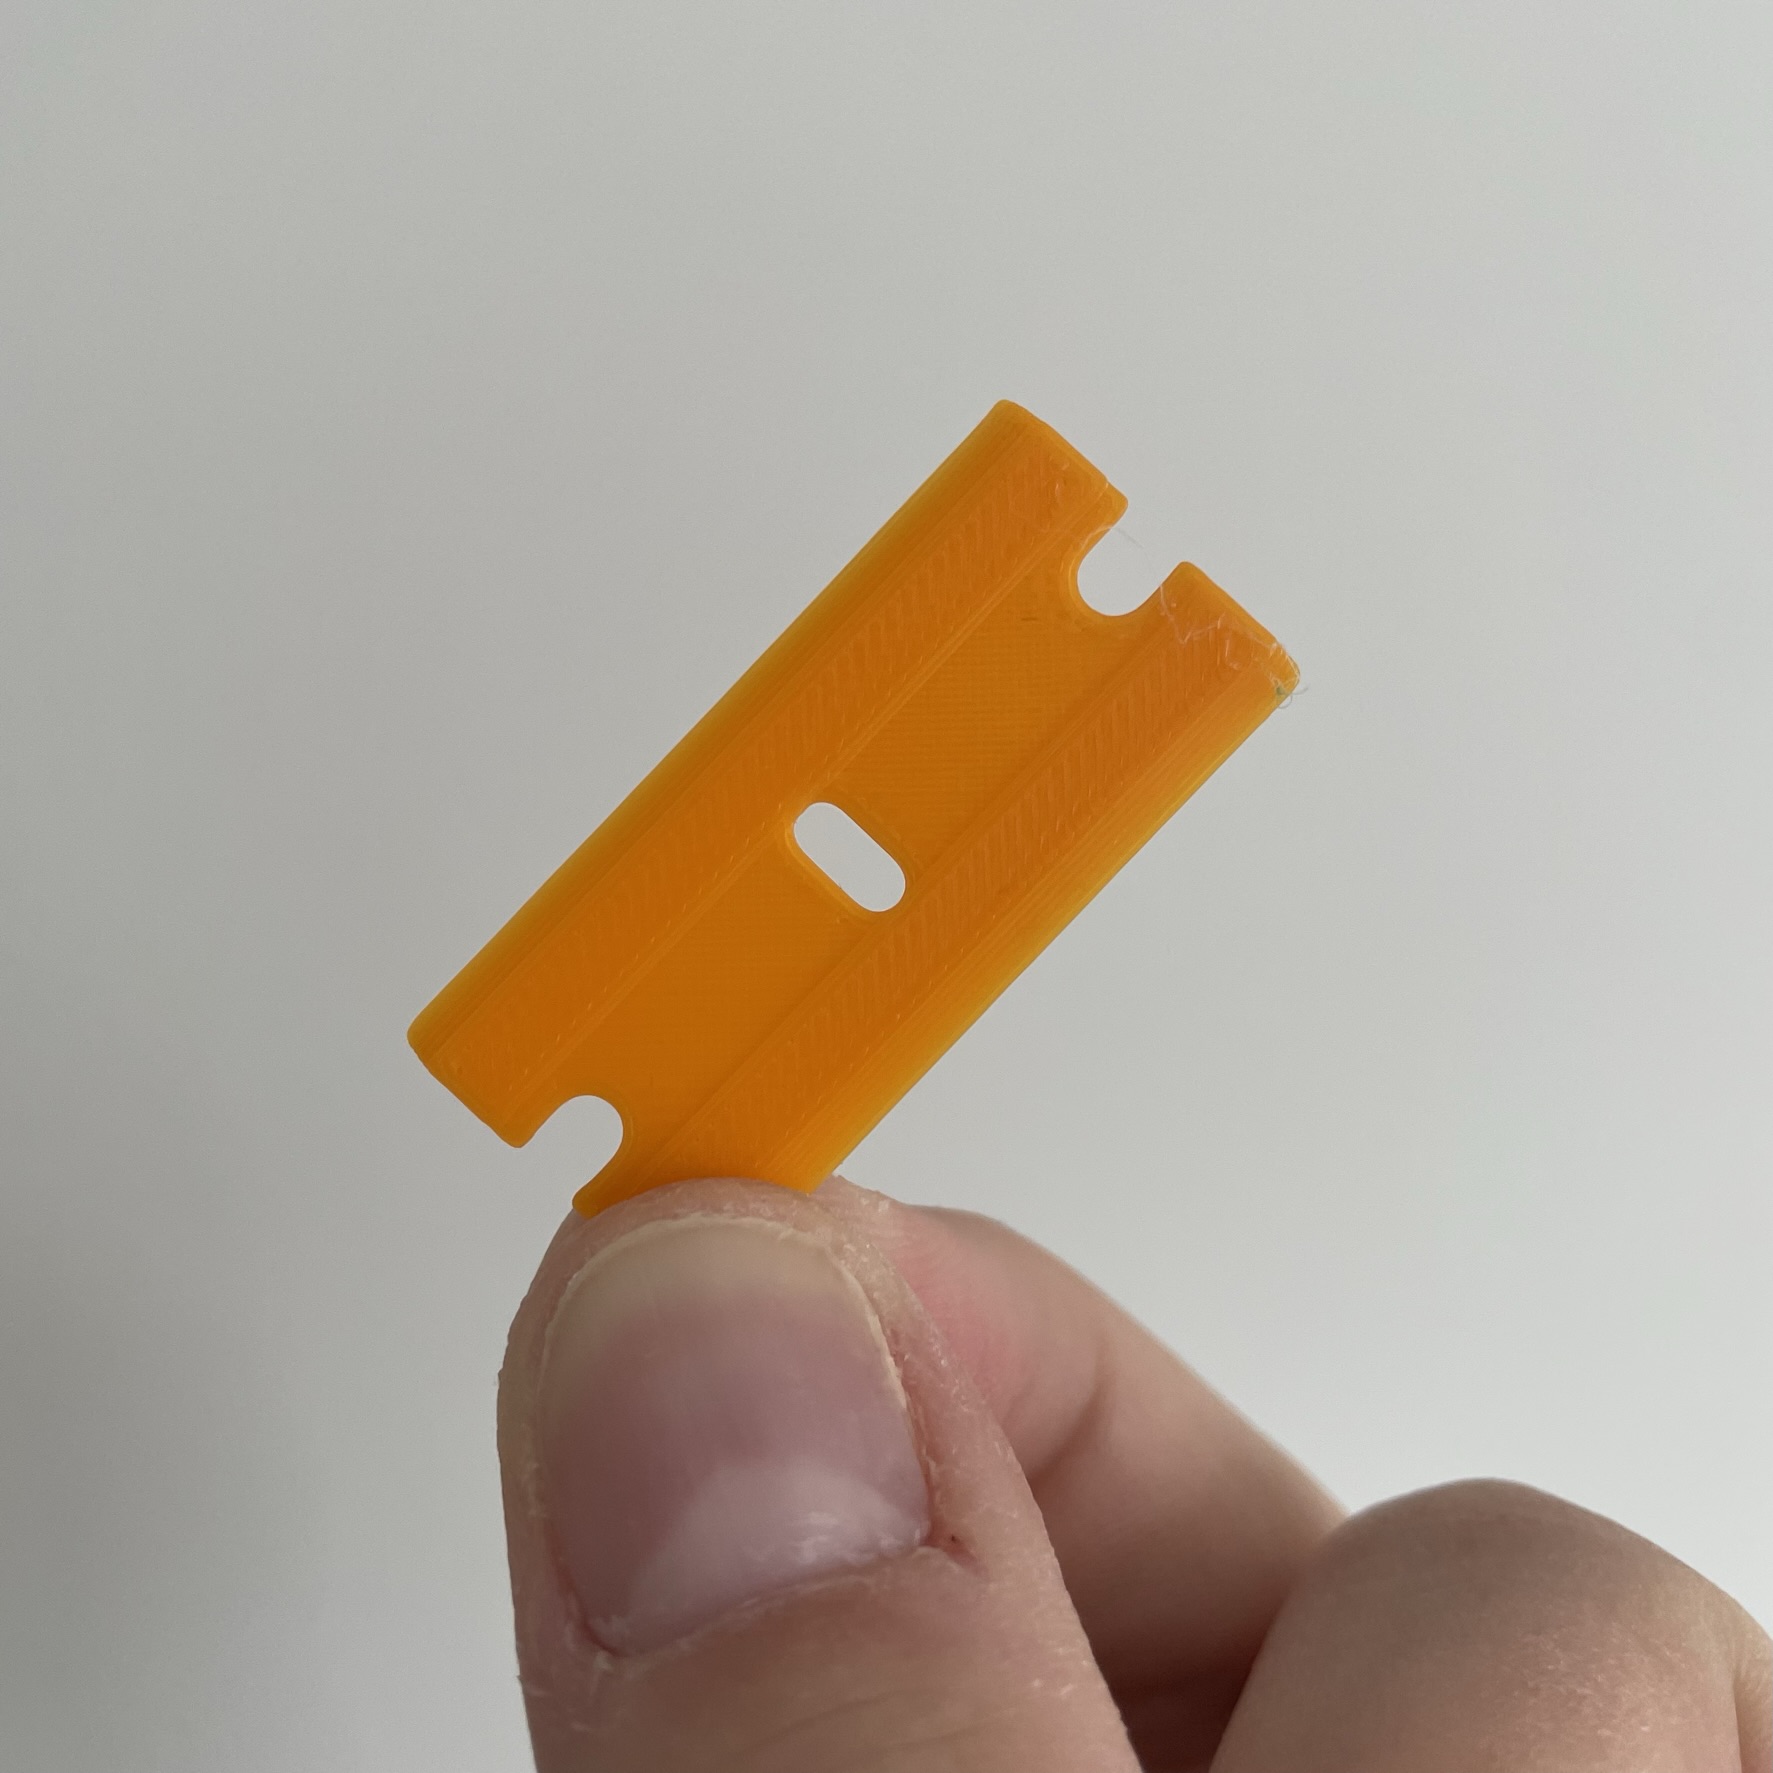 Plastic razor blade scrapers are amazing : r/3Dprinting